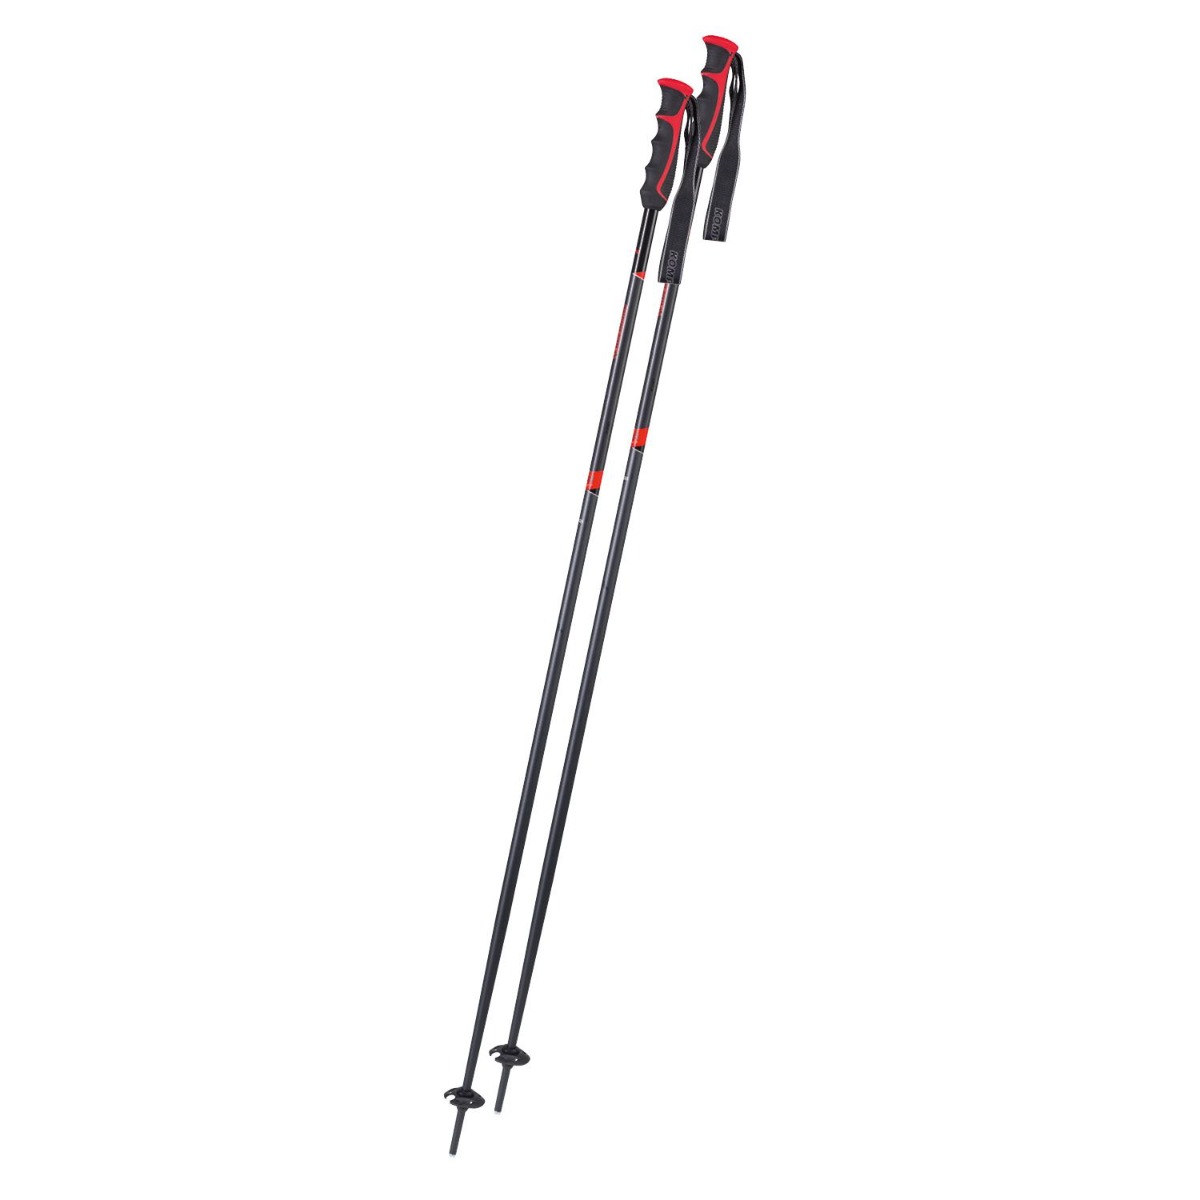 Komperdell Booster Speed Aluminium skistokken - Zwart/rood - 115 cm